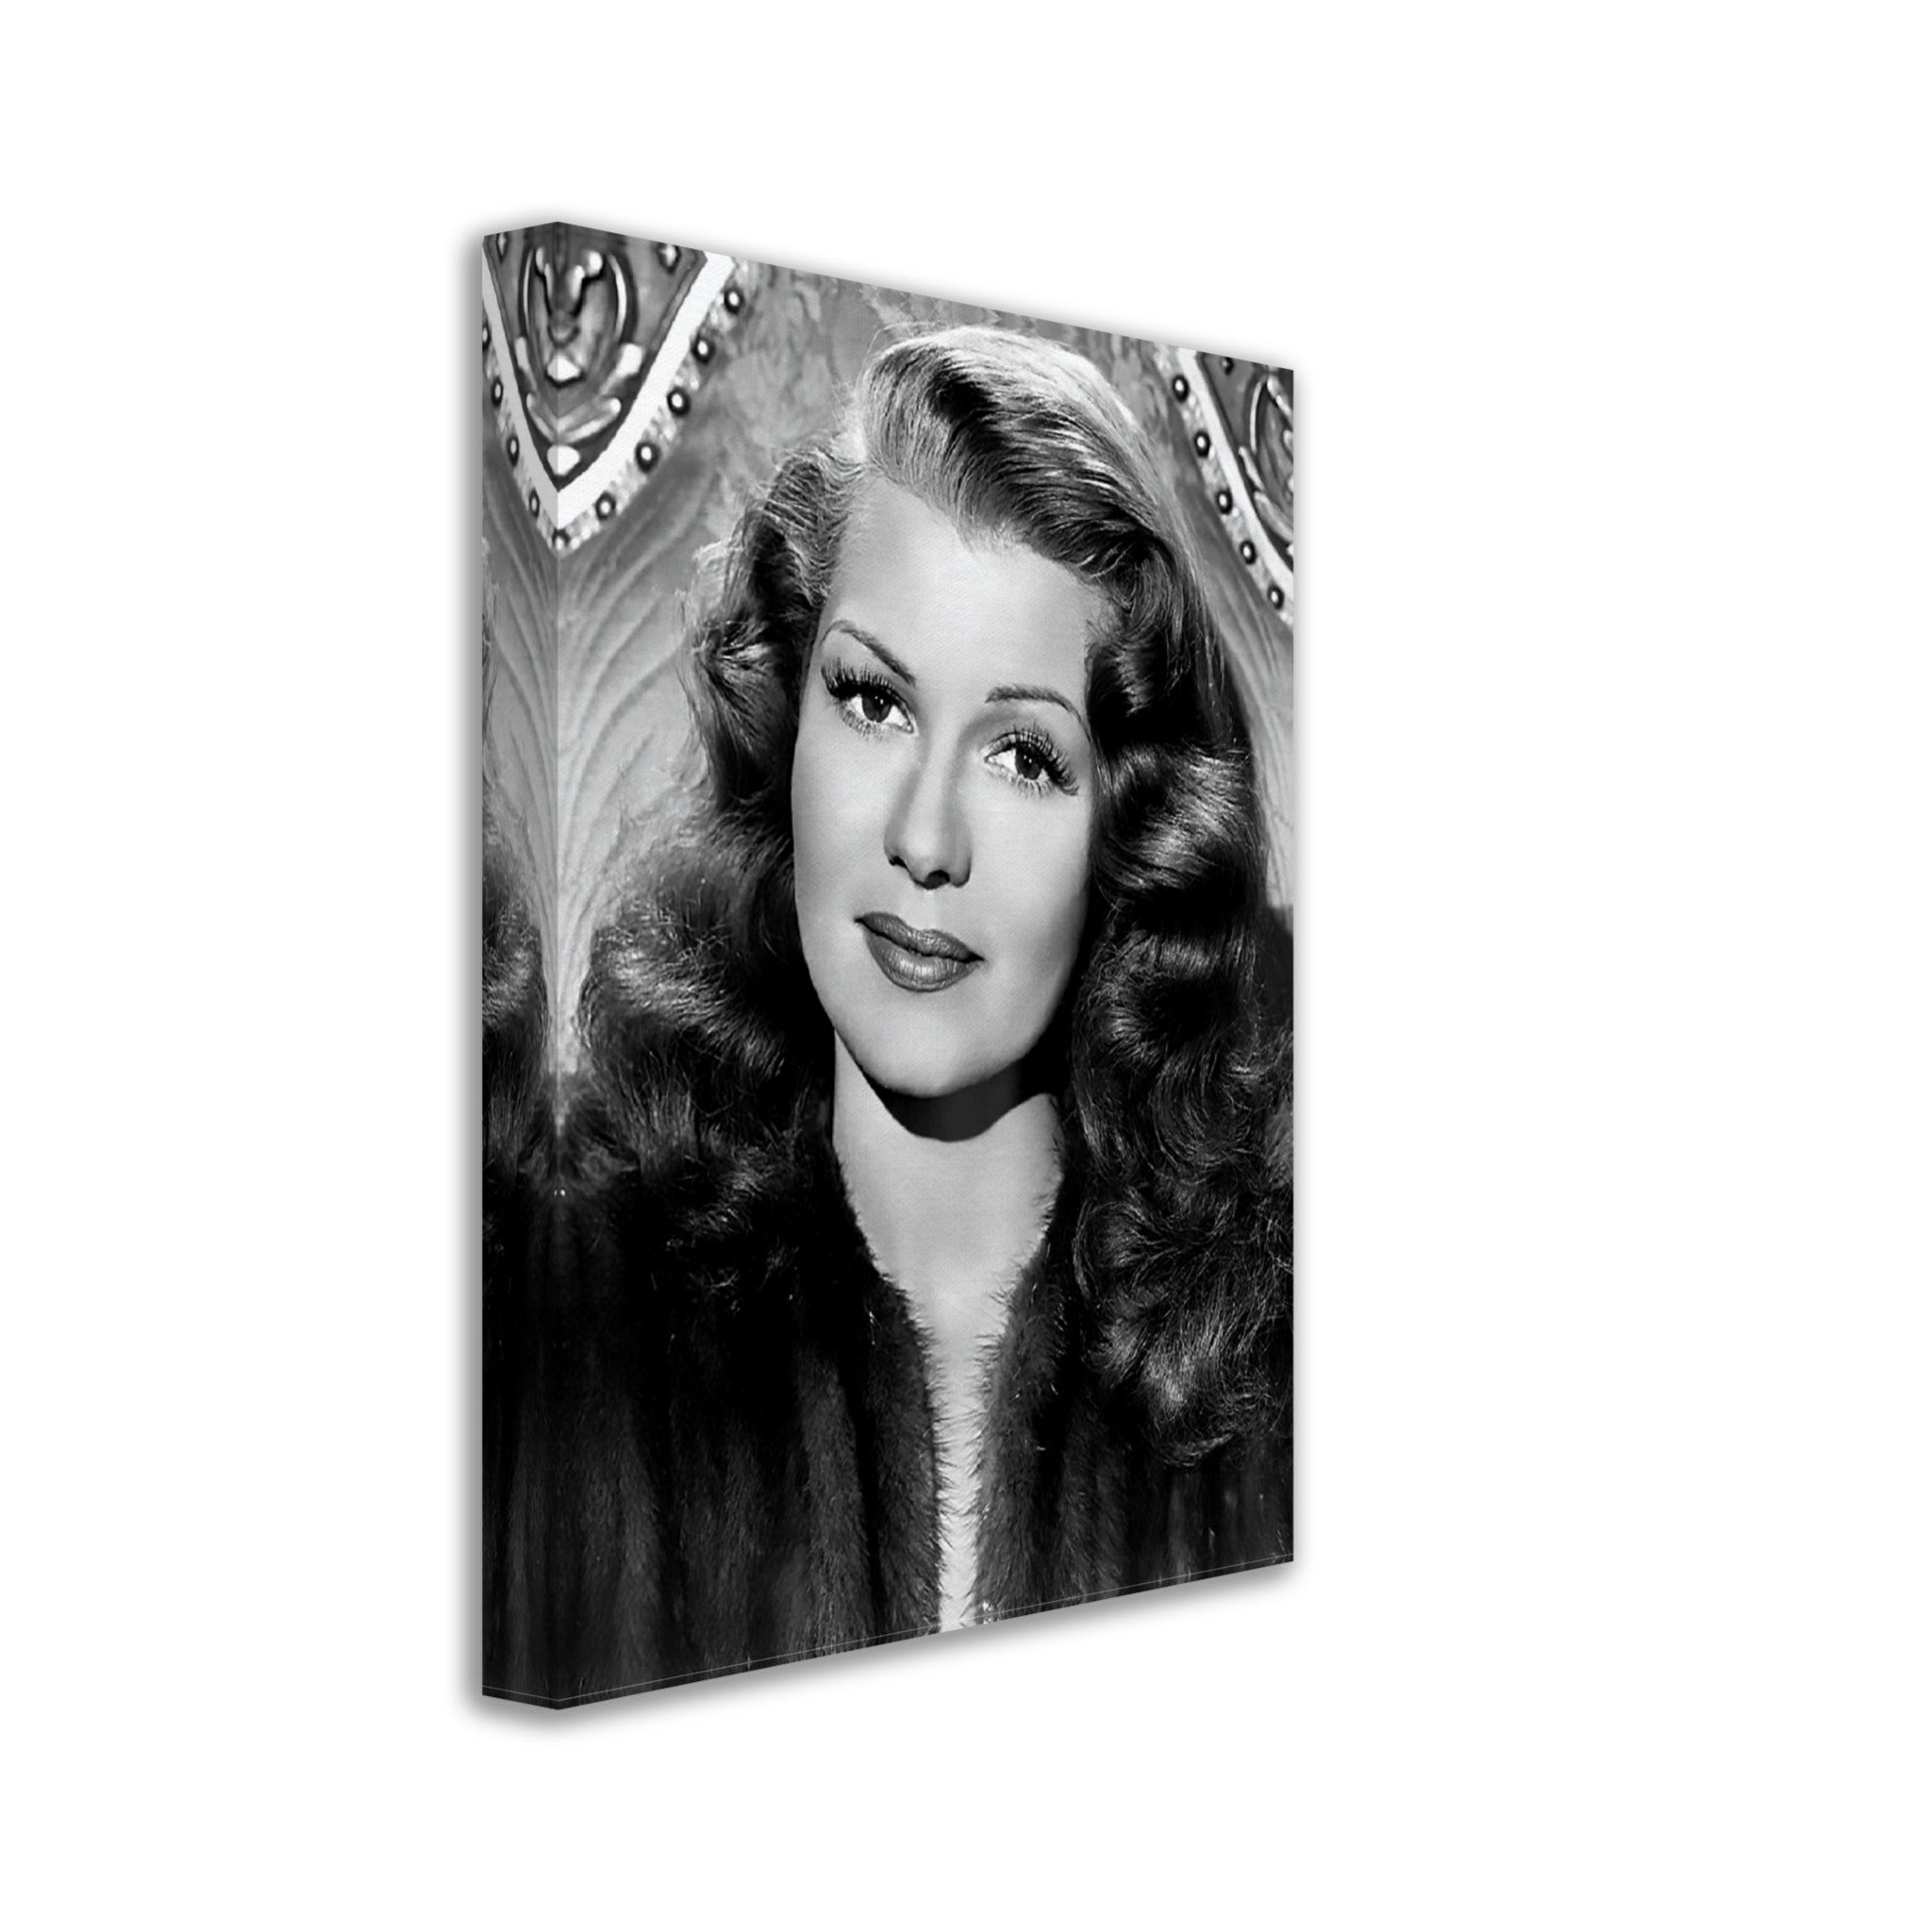 Rita Hayworth Canvas, The Love Goddess, Vintage Photo - Iconic Rita Hayworth Canvas Print - Hollywood Silver Screen Star - WallArtPrints4U